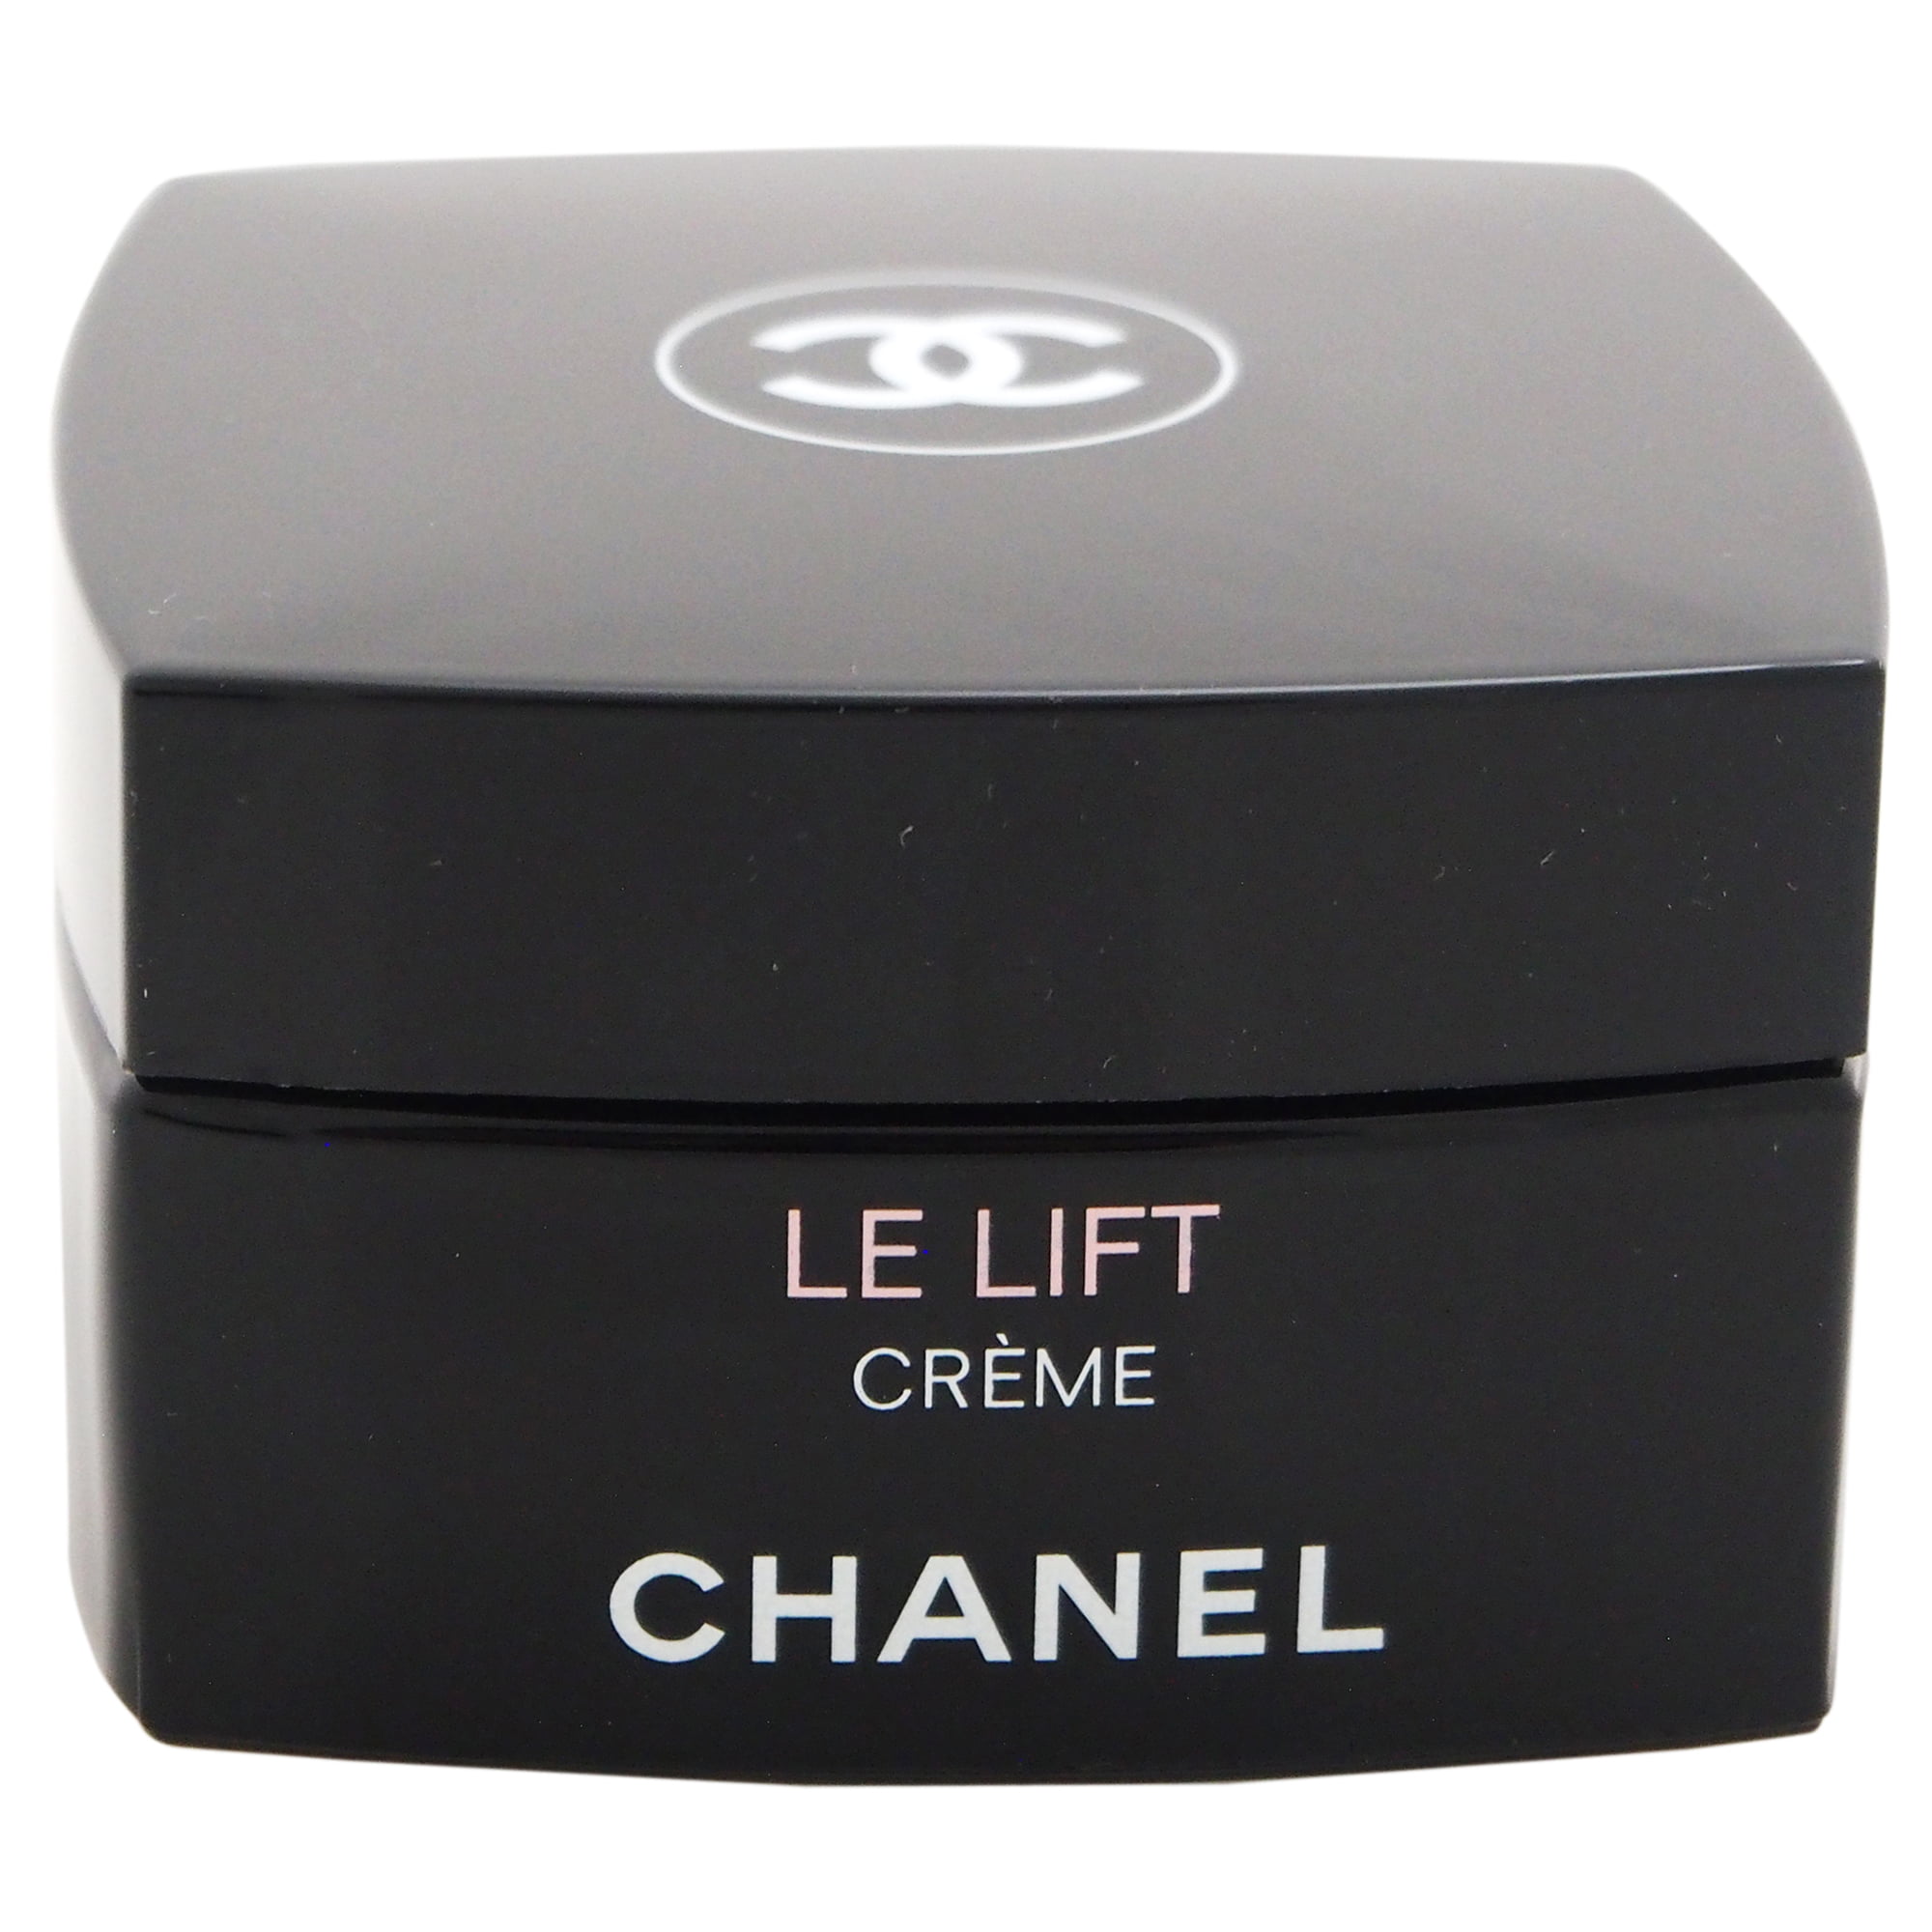 CHANEL Le Lift Creme Fine Moisturiser Cream - 1.7oz for sale online